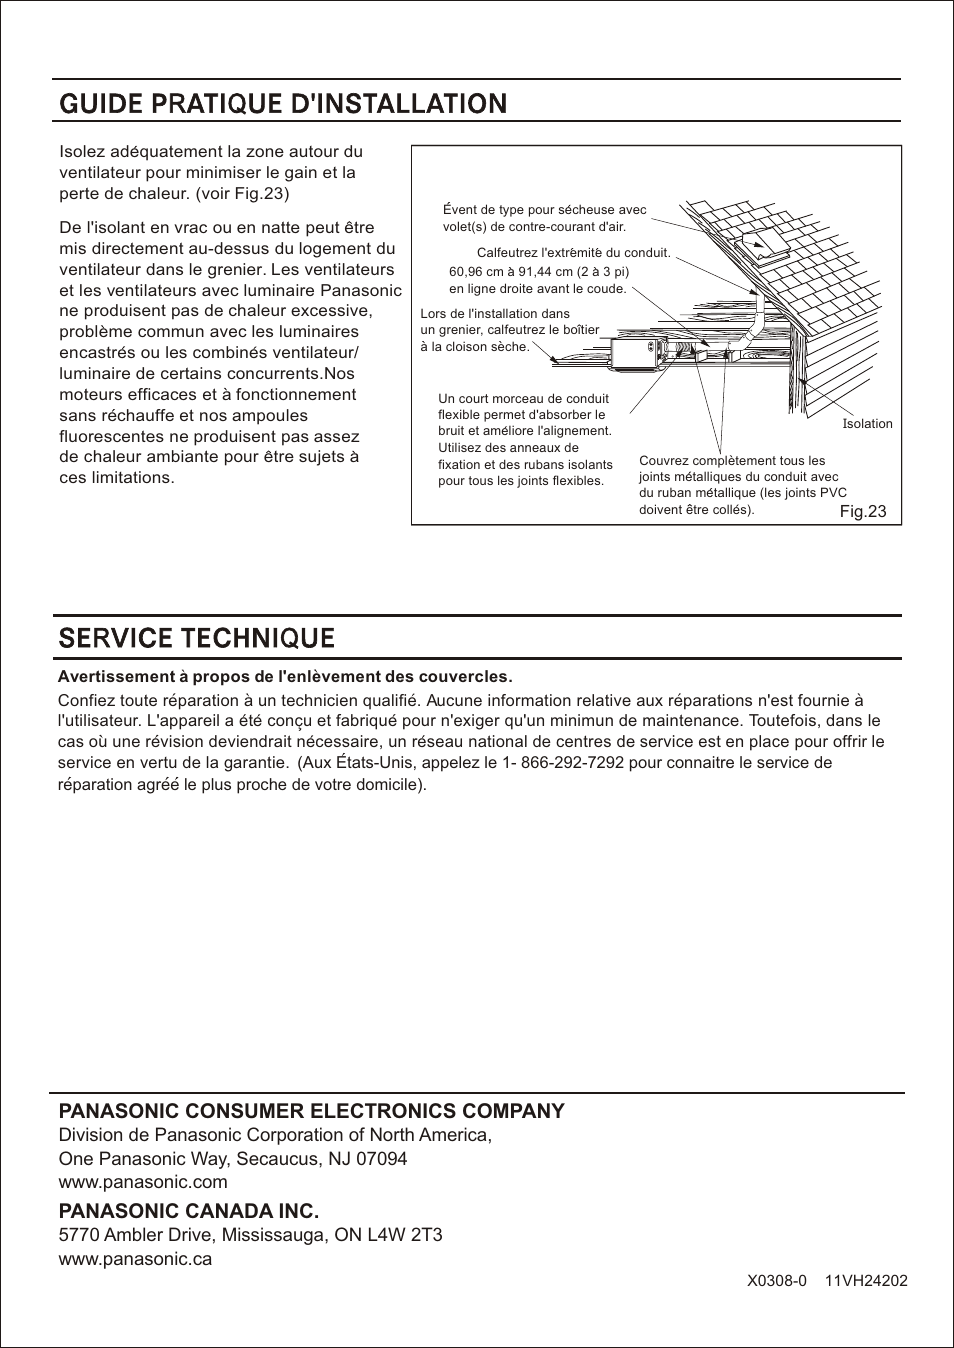 Т³гж 12, Panasonic consumer electronics company, Panasonic canada inc | Panasonic FV-11VH2 Manuel d'utilisation | Page 12 / 12